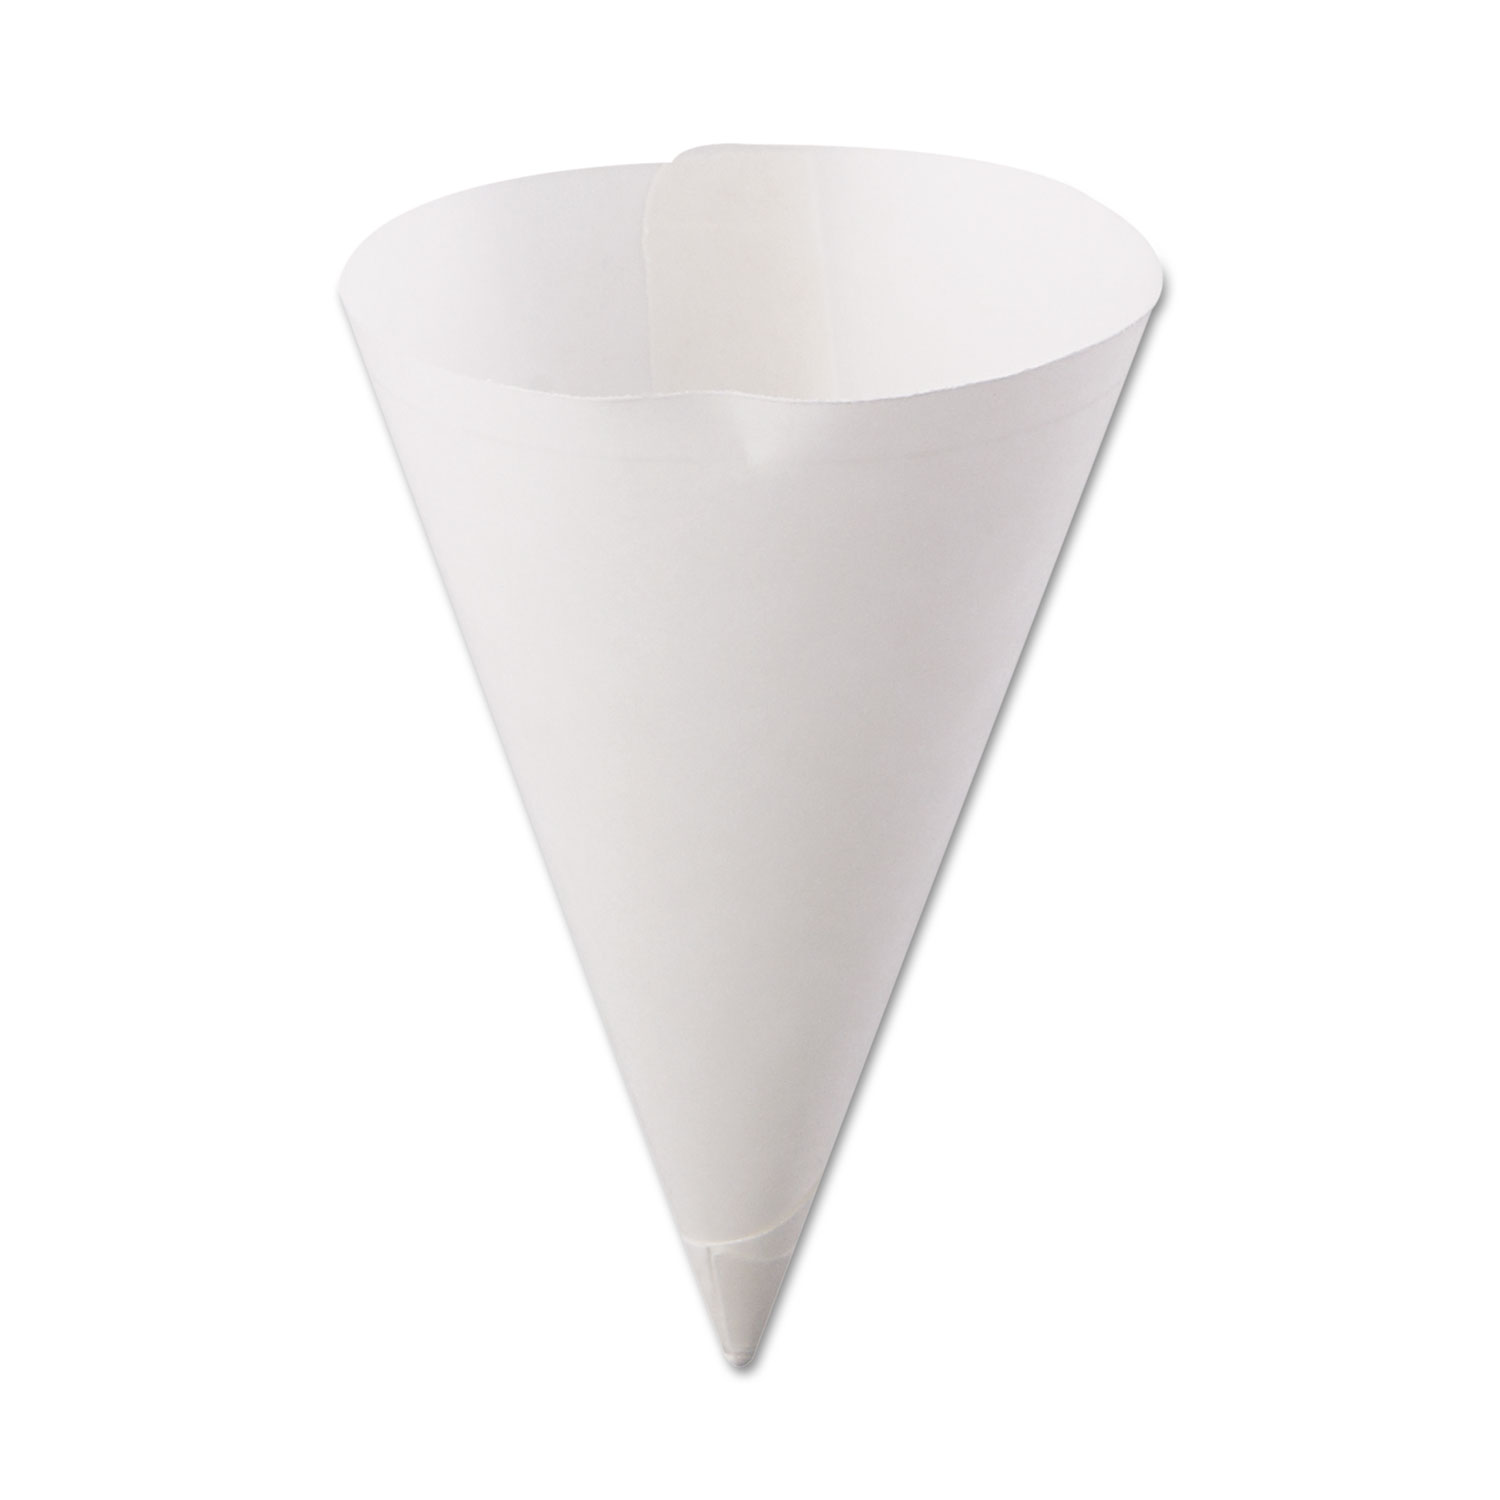  Konie KCI 7.0KSE Straight-Edge, Poly Bagged Paper Cone Cups, 7oz, White, 250/Bag, 5000/Carton (KCI70KSE) 